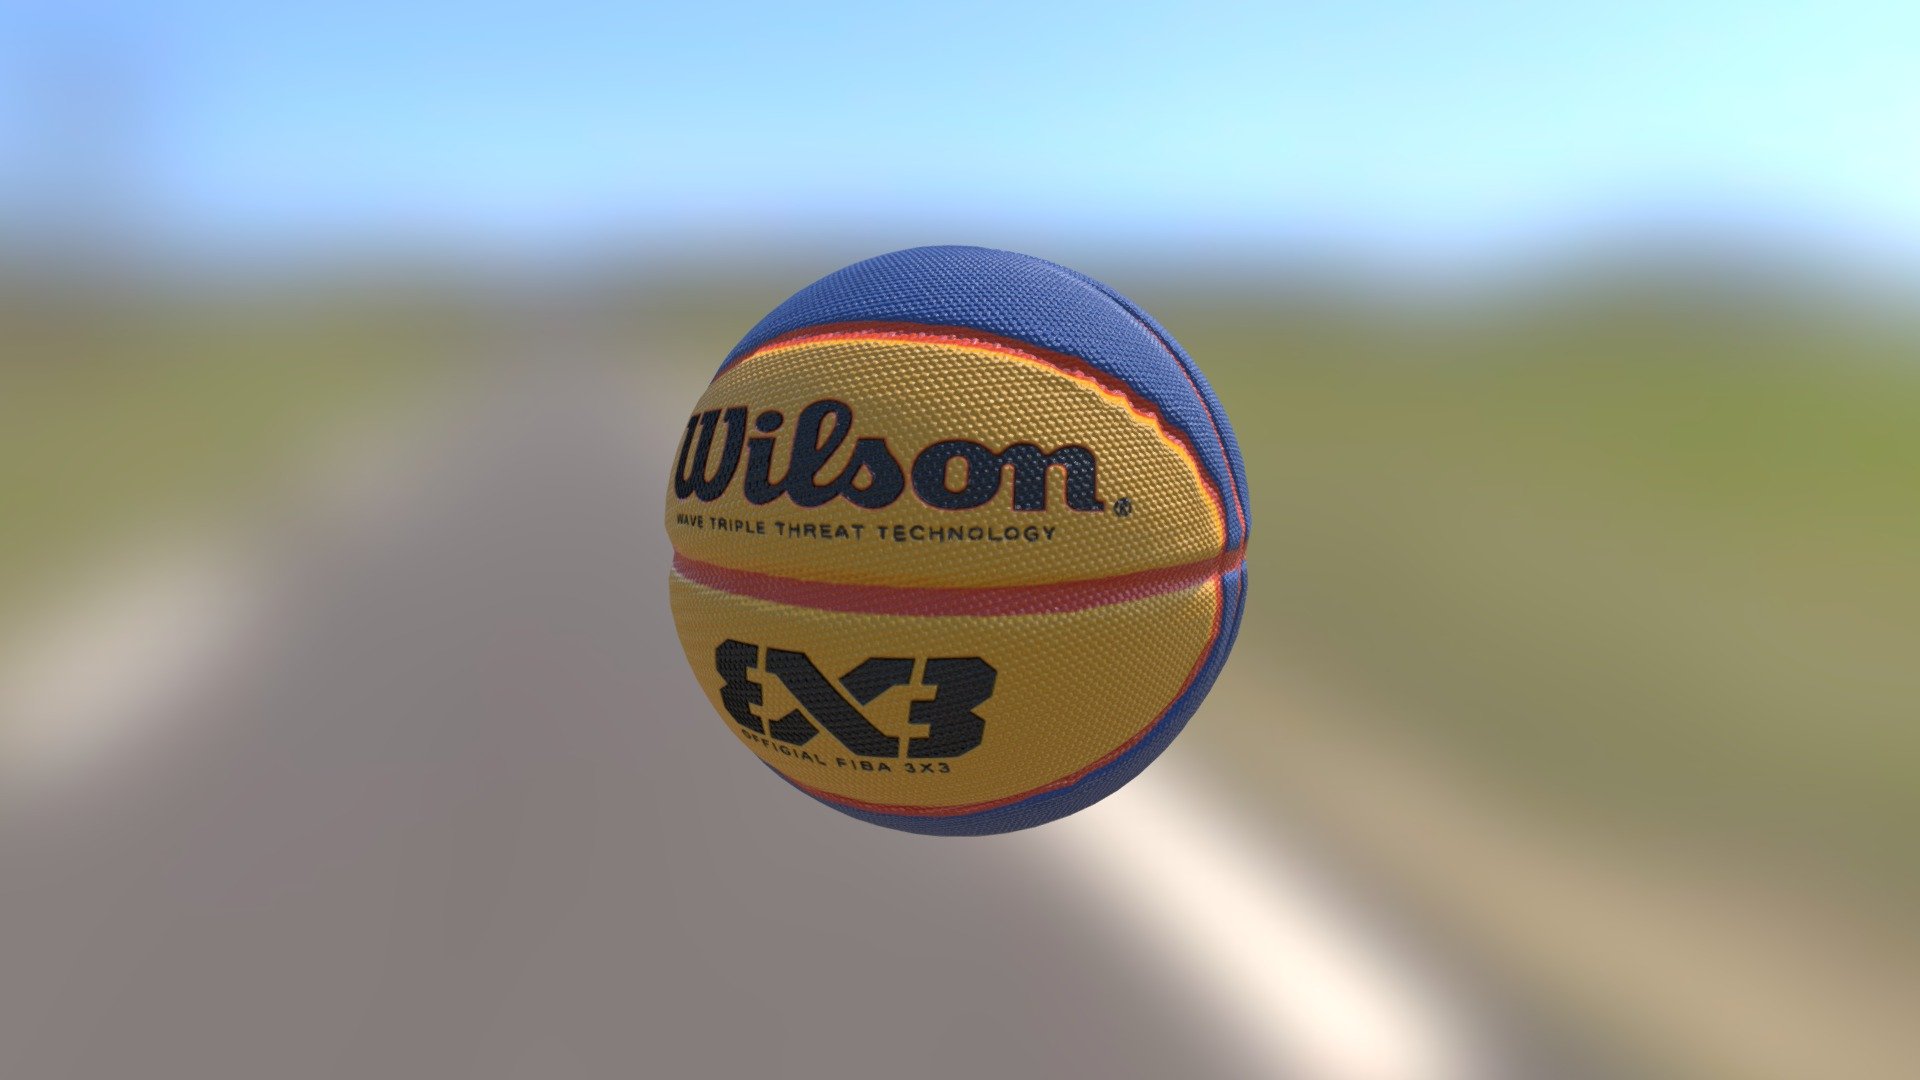 FIBA 3x3  Wilson Sporting Goods